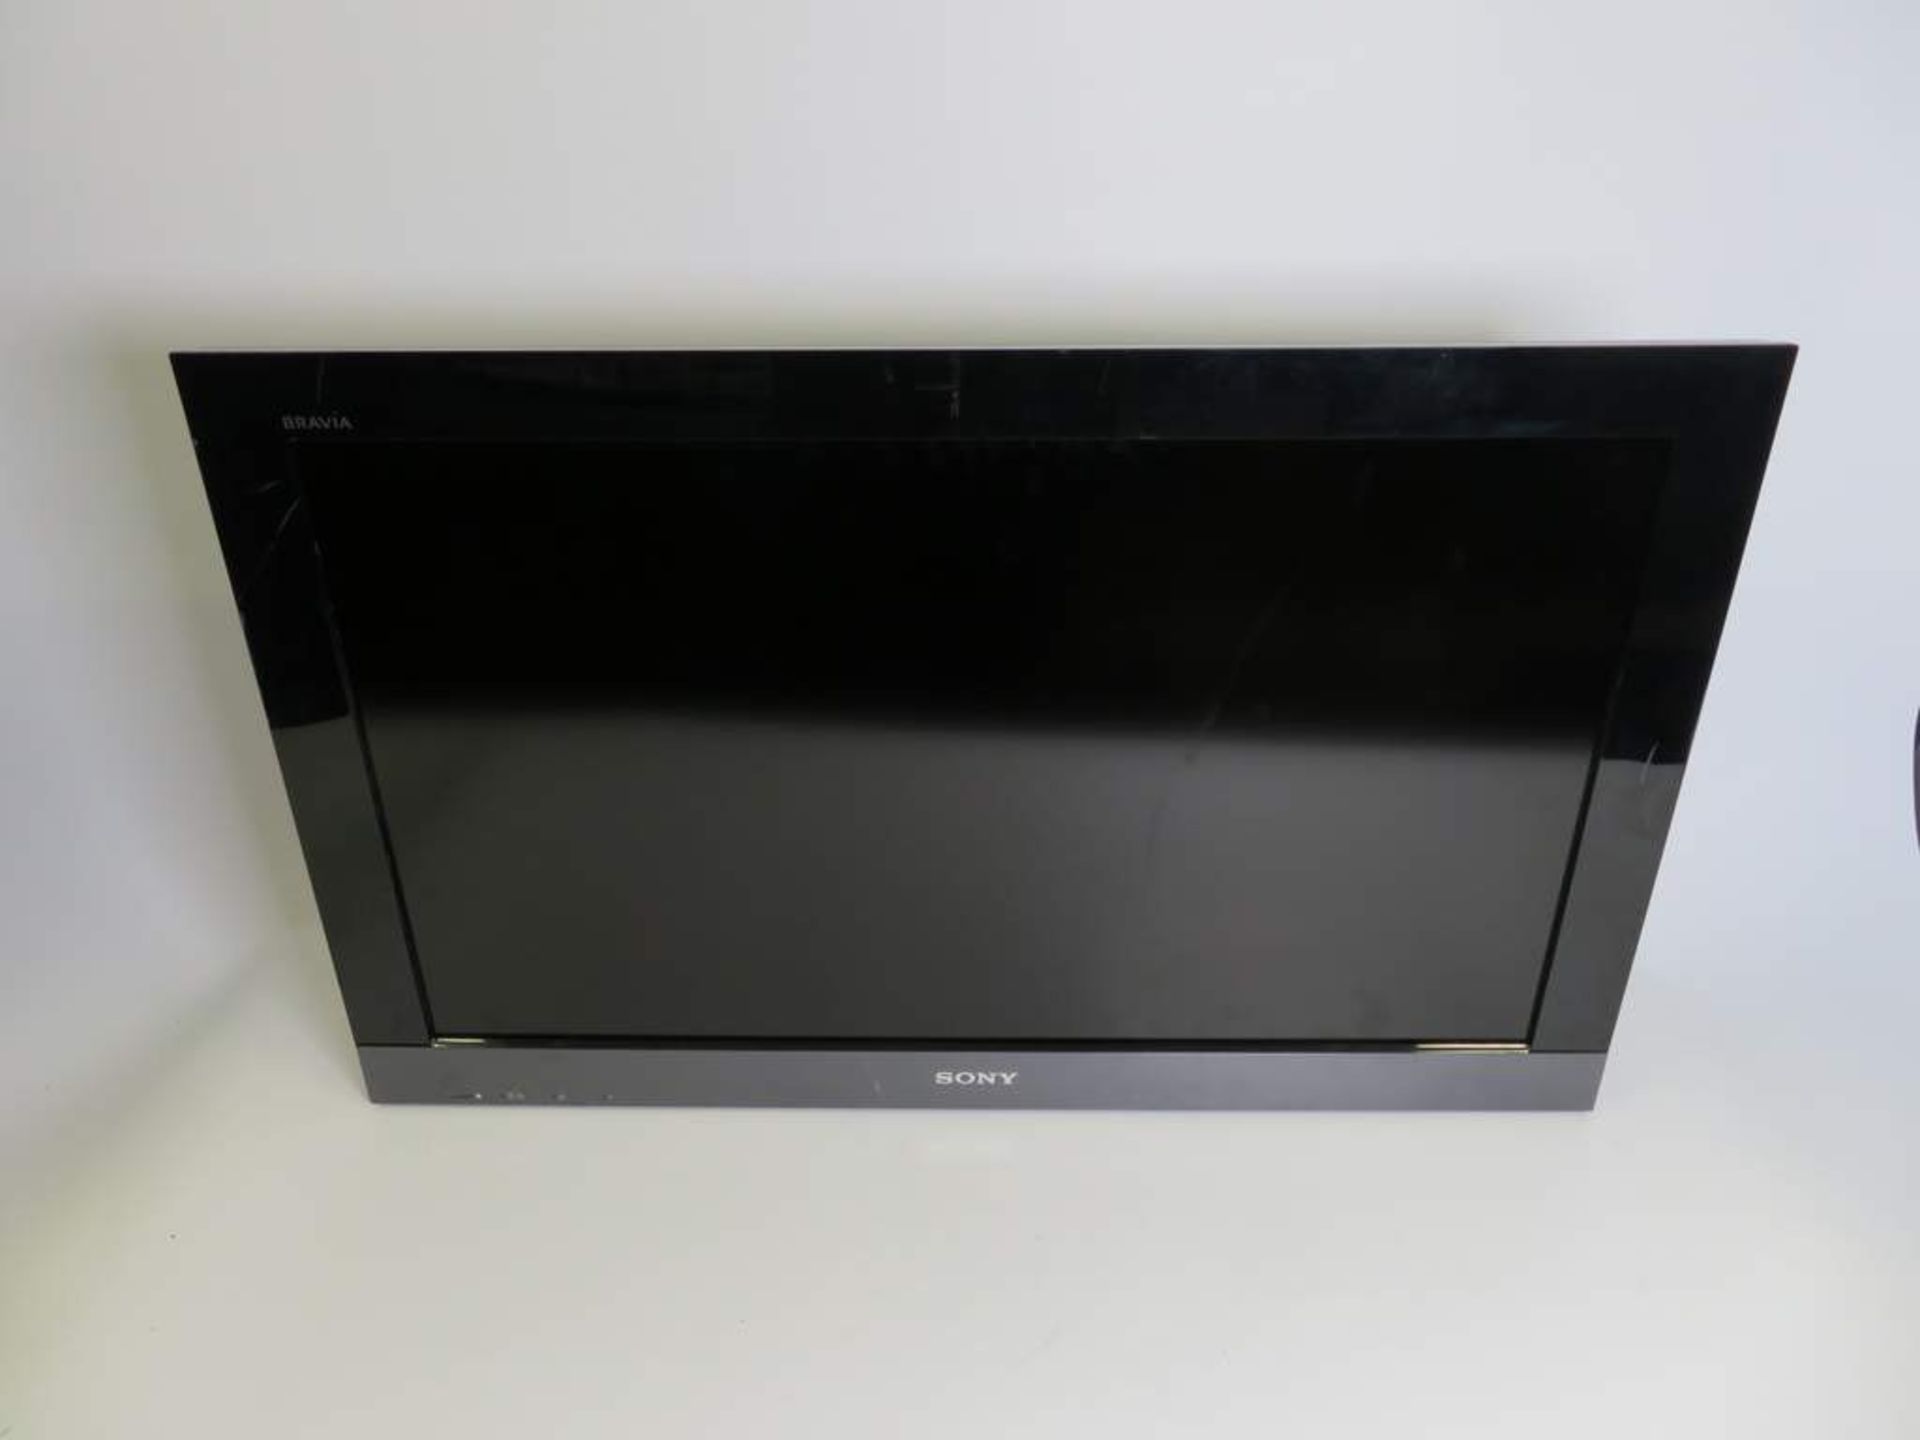 Sony KDL 32EX503 LCD TV 2010